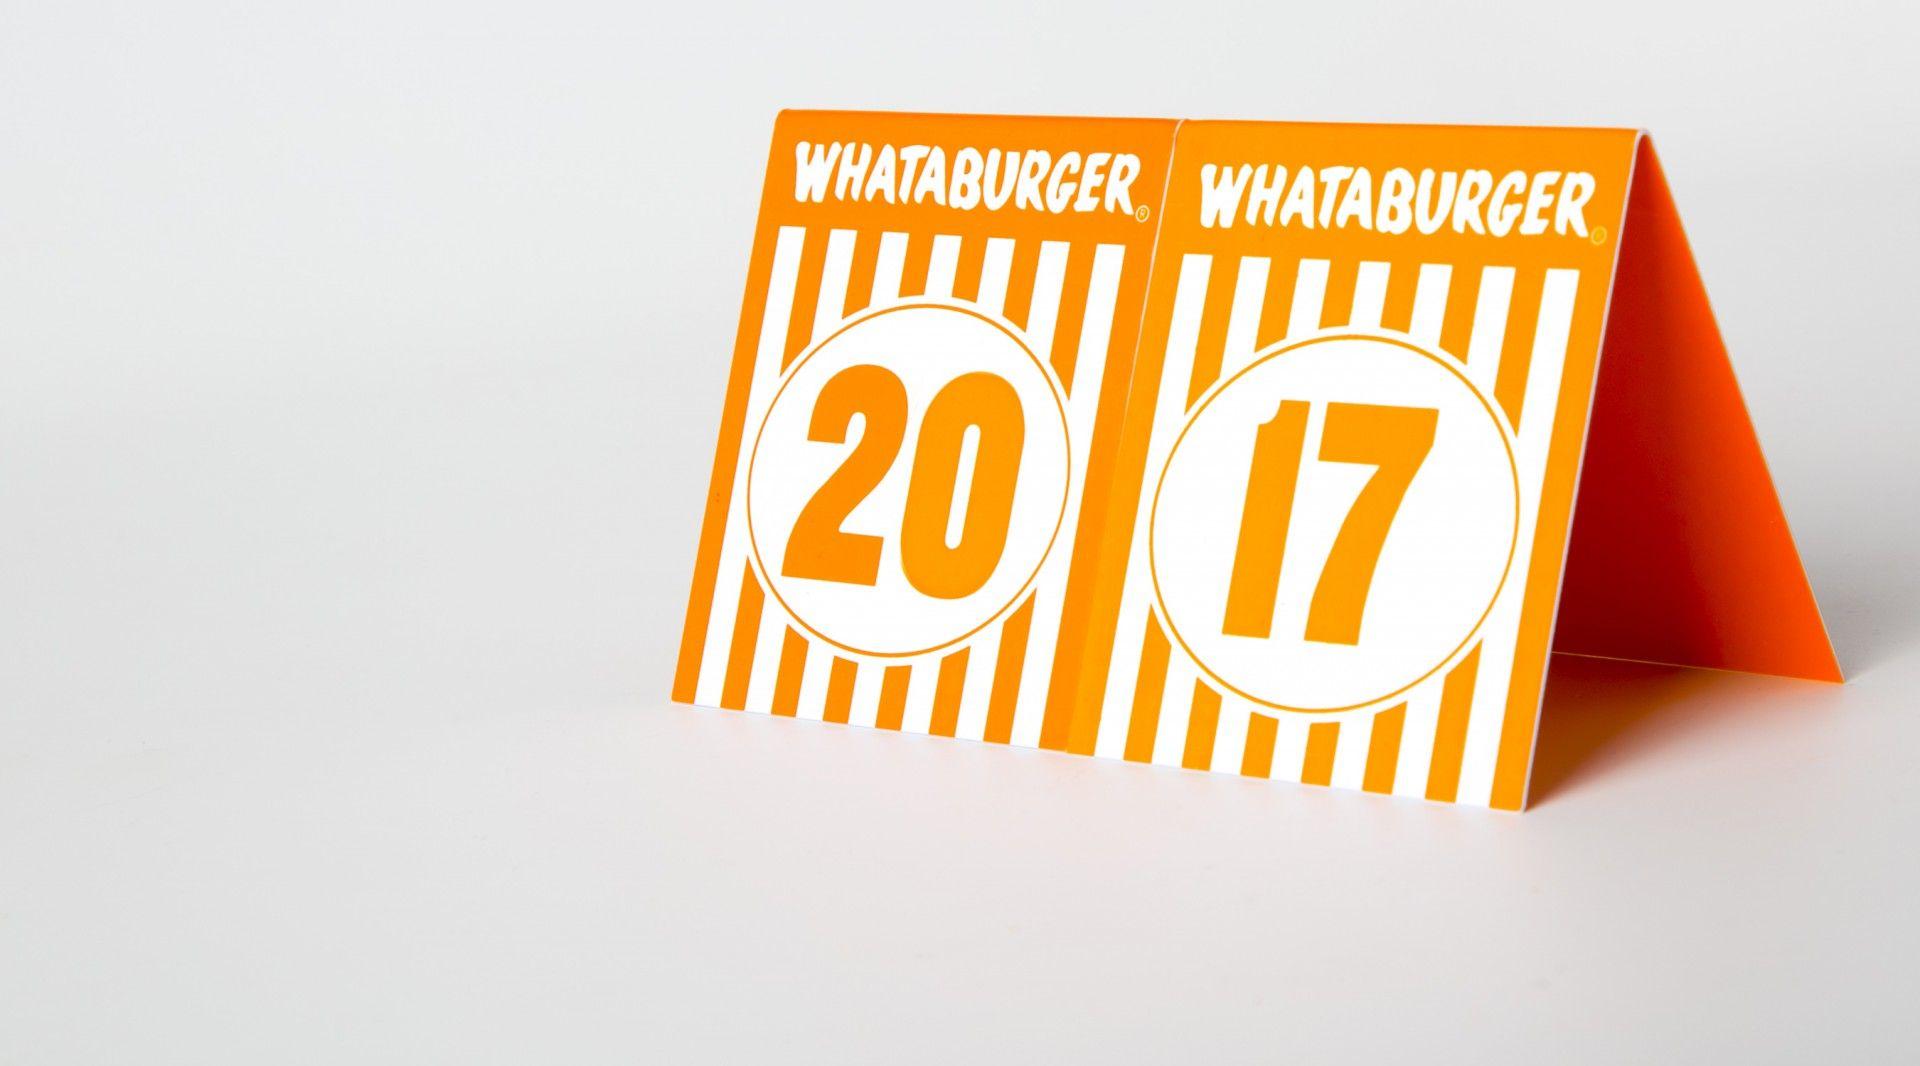 Whataburger Logo - #Winning: The best Whataburger fan stories of 2017